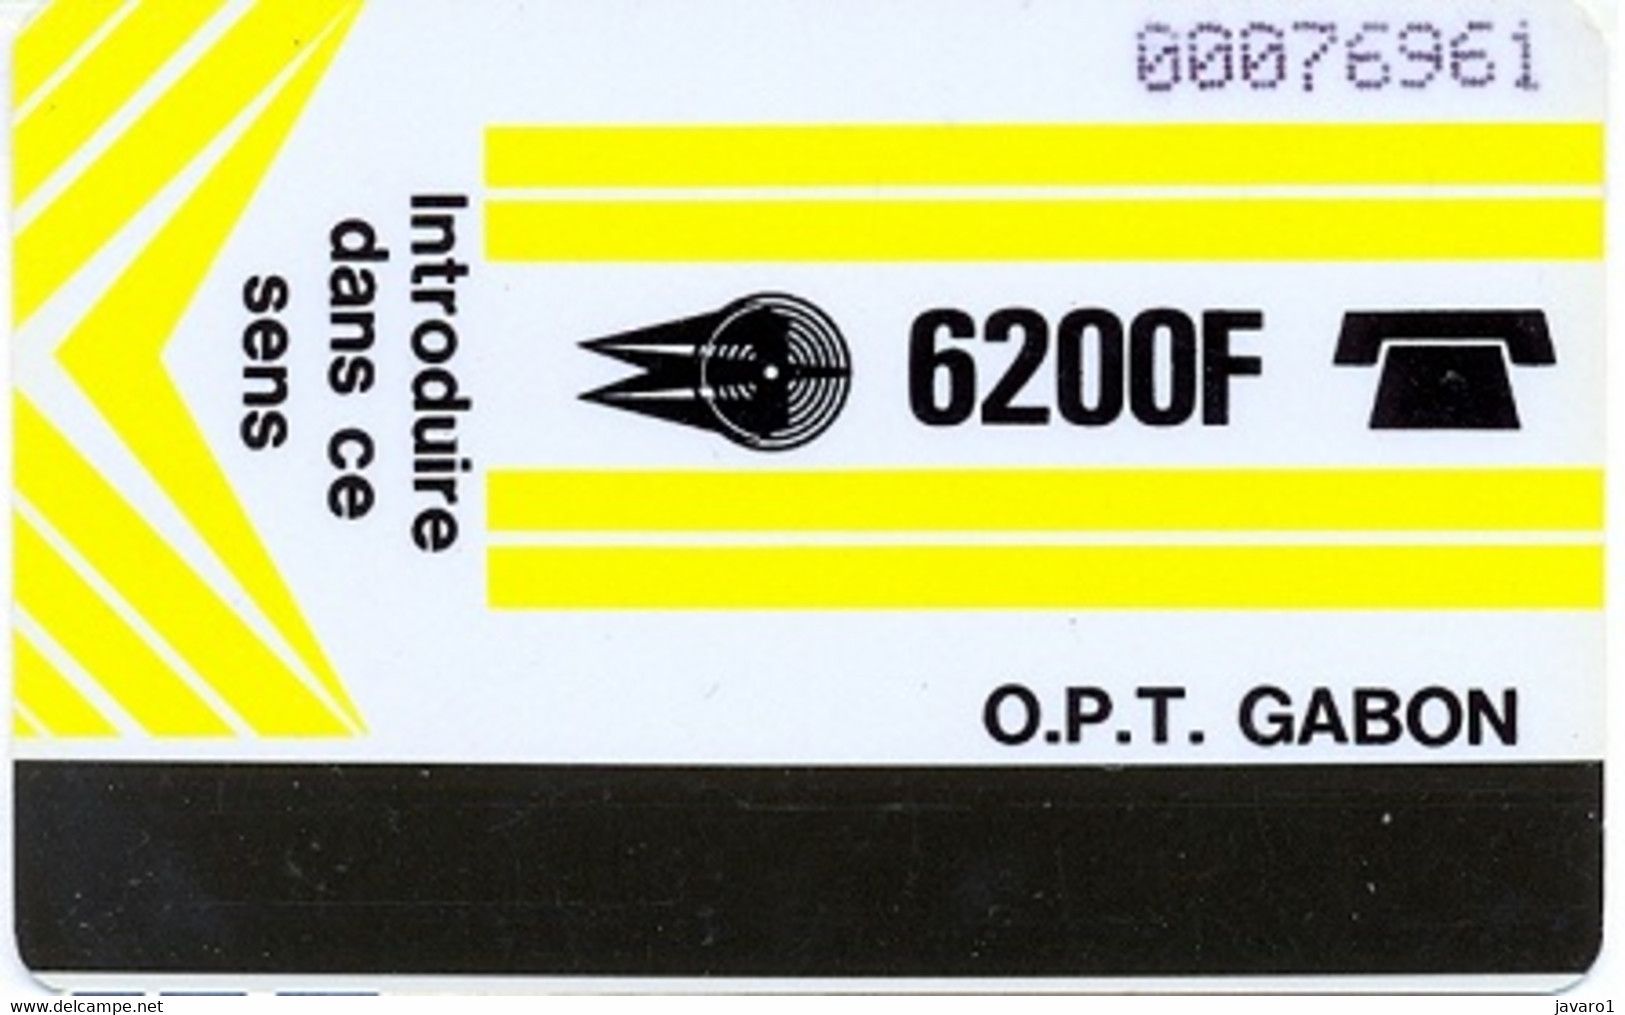 GABON : GAB04A 6200 F, Rev.= (SCORE)slashed 0 USED - Gabon